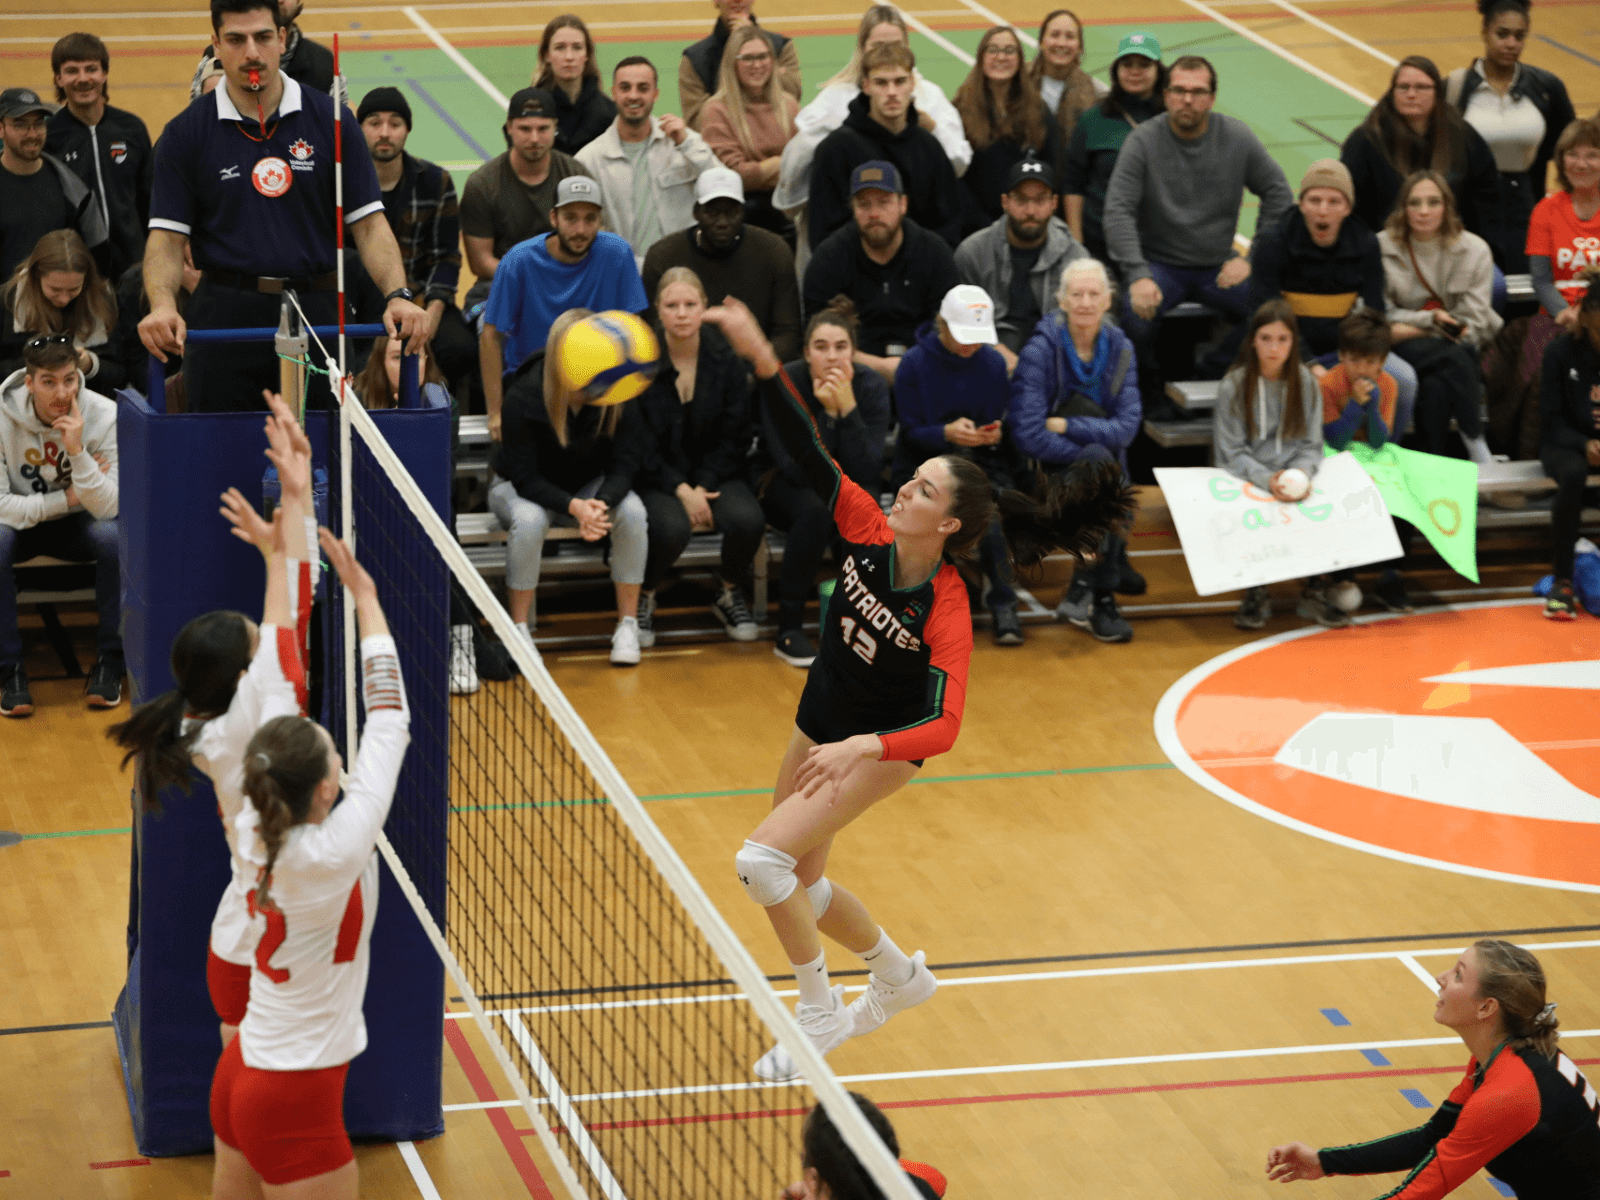 Volleyball: revers en lever de rideau